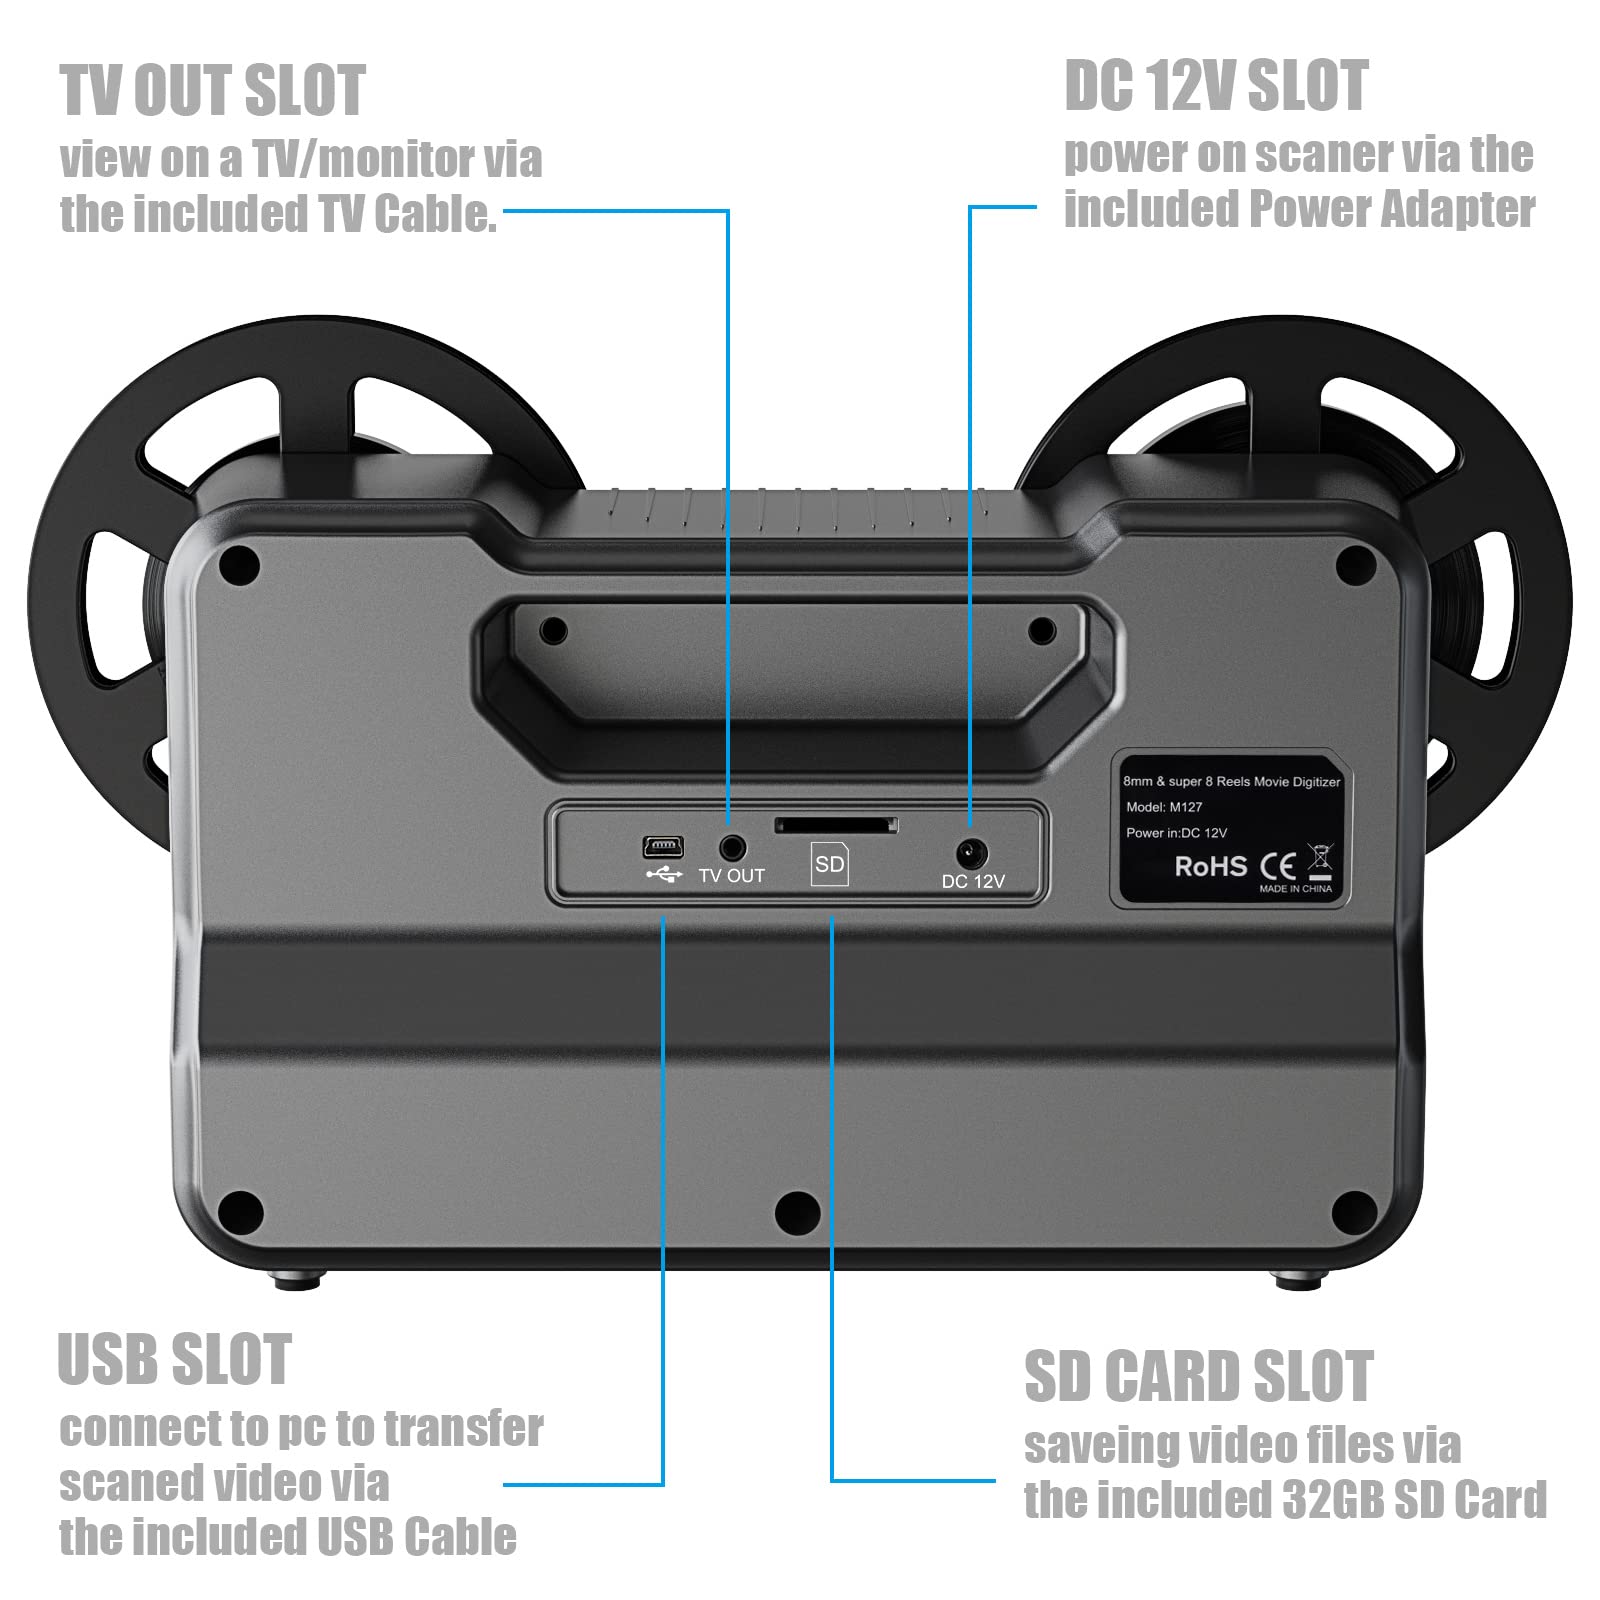 8mm & Super 8 Reels to Digital MovieMaker Film Sanner Converter, 2.4